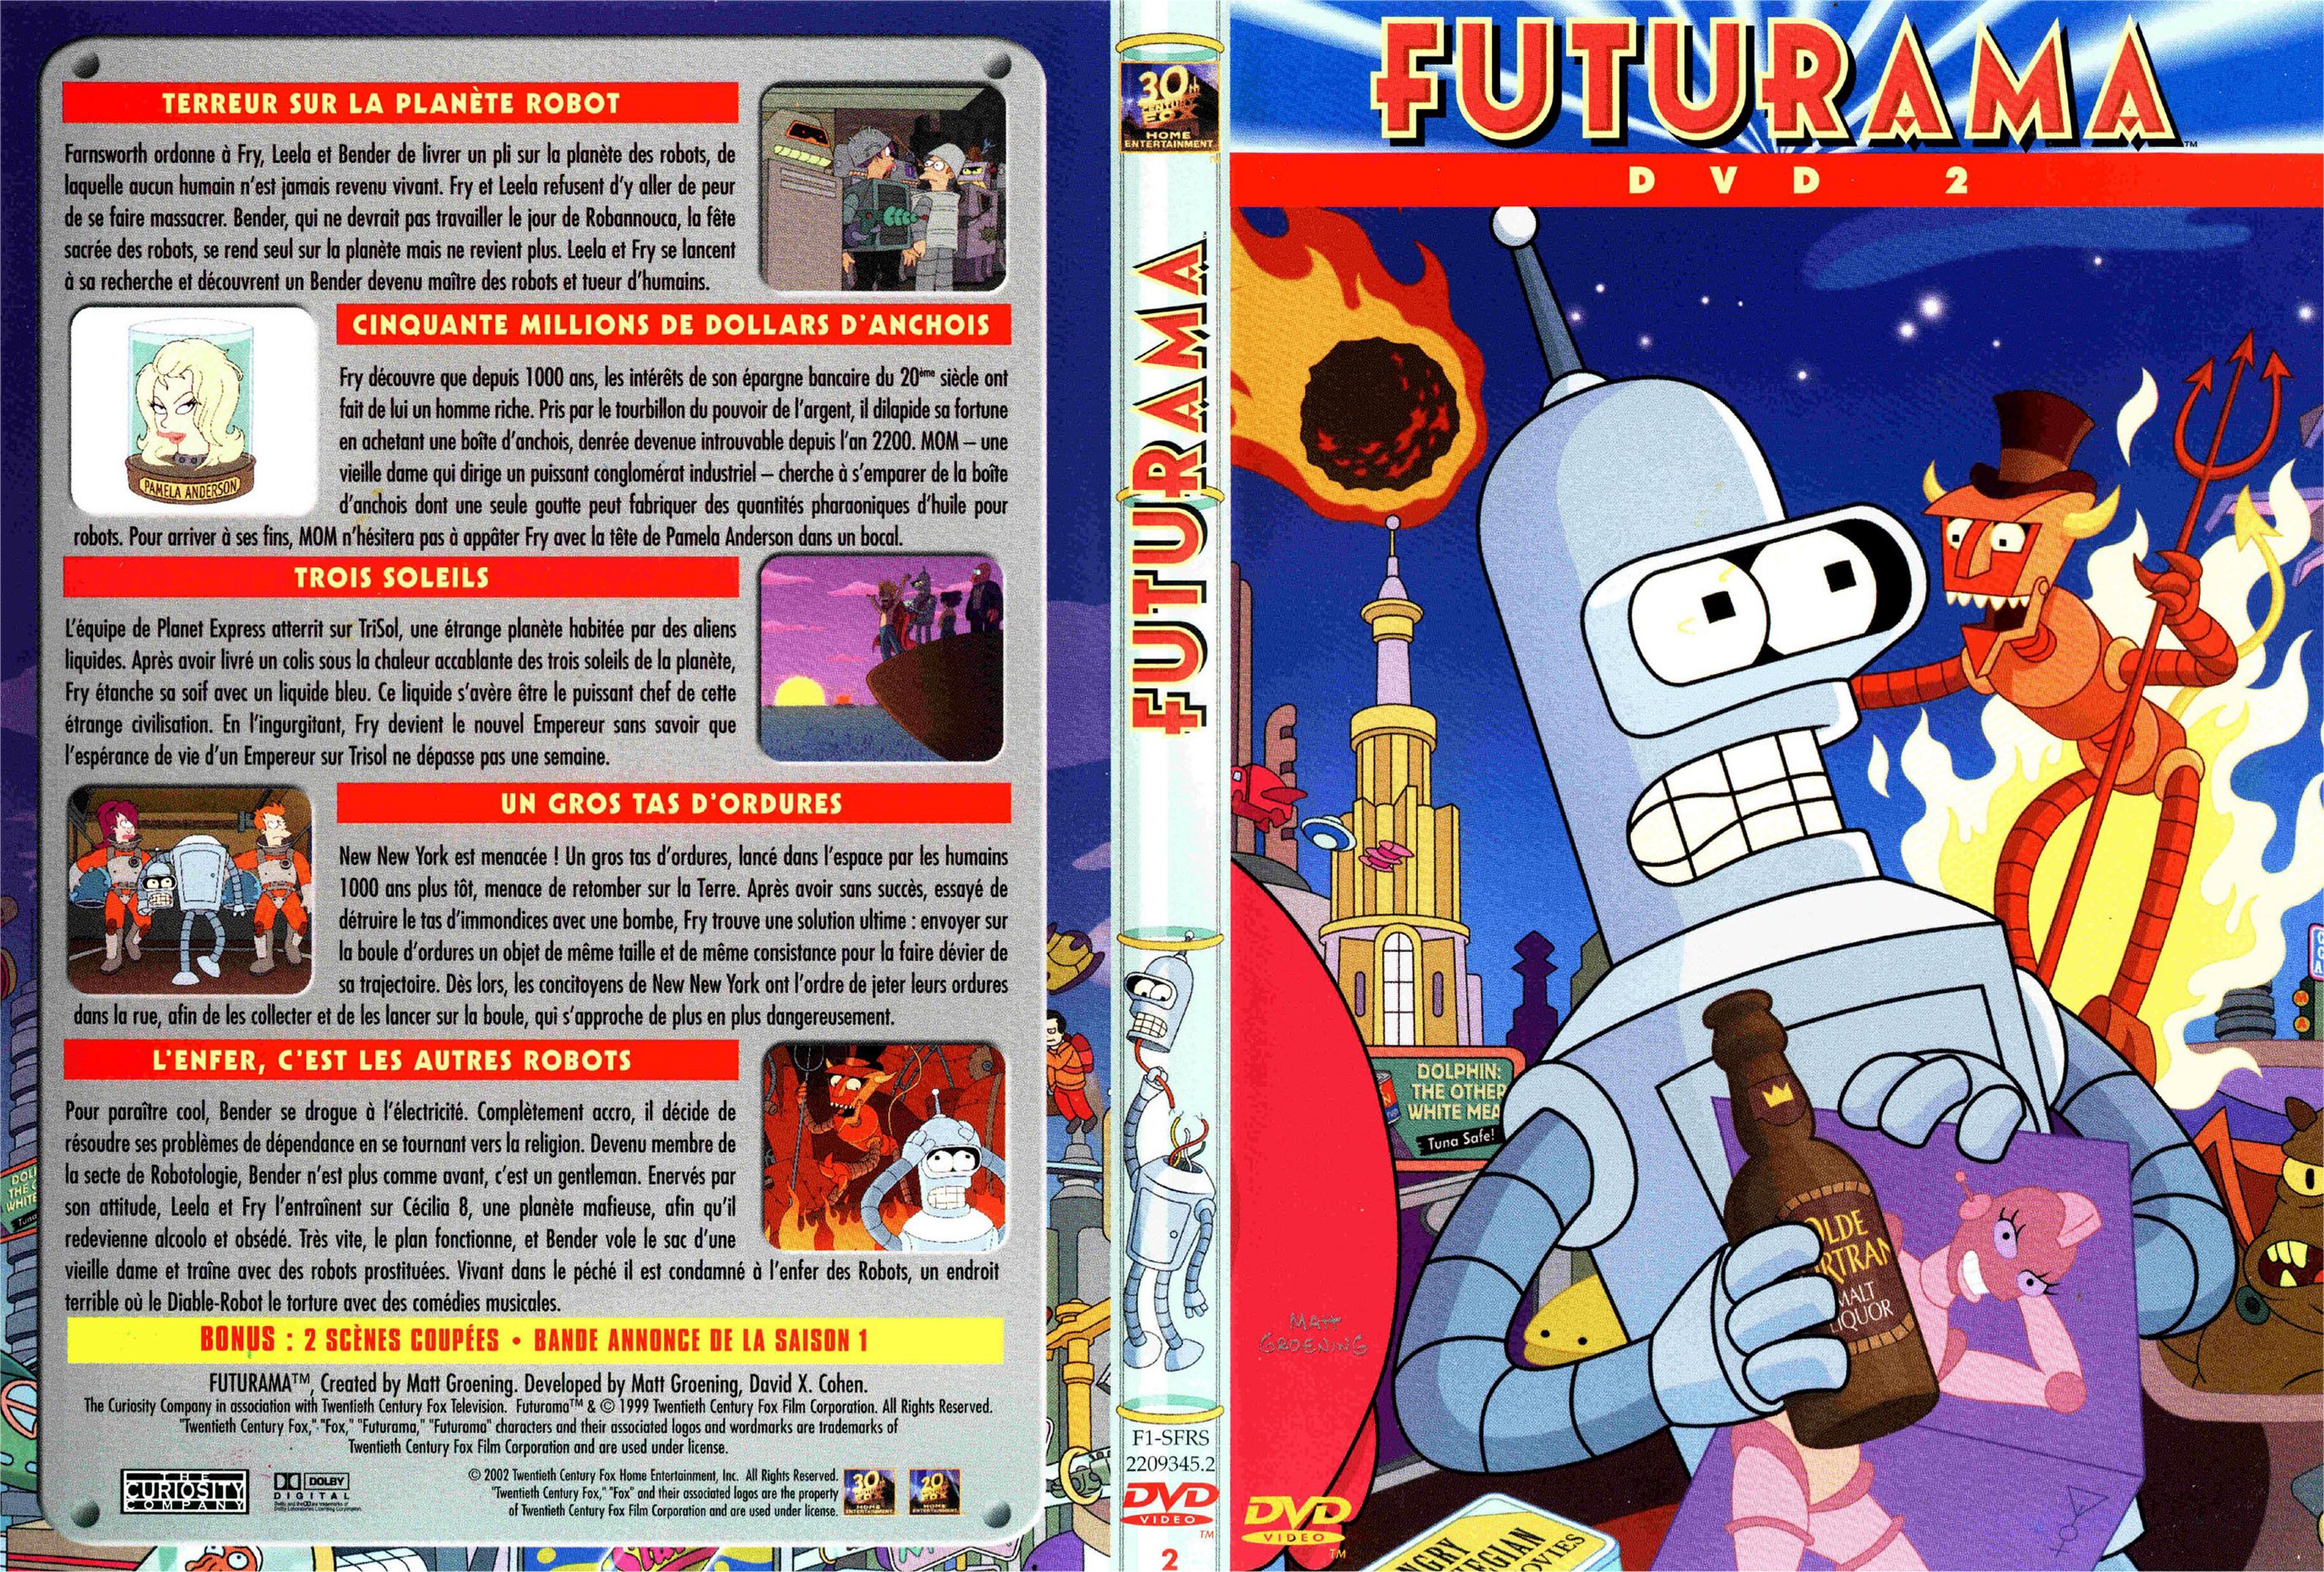 Jaquette DVD Futurama saison 1 DVD 2